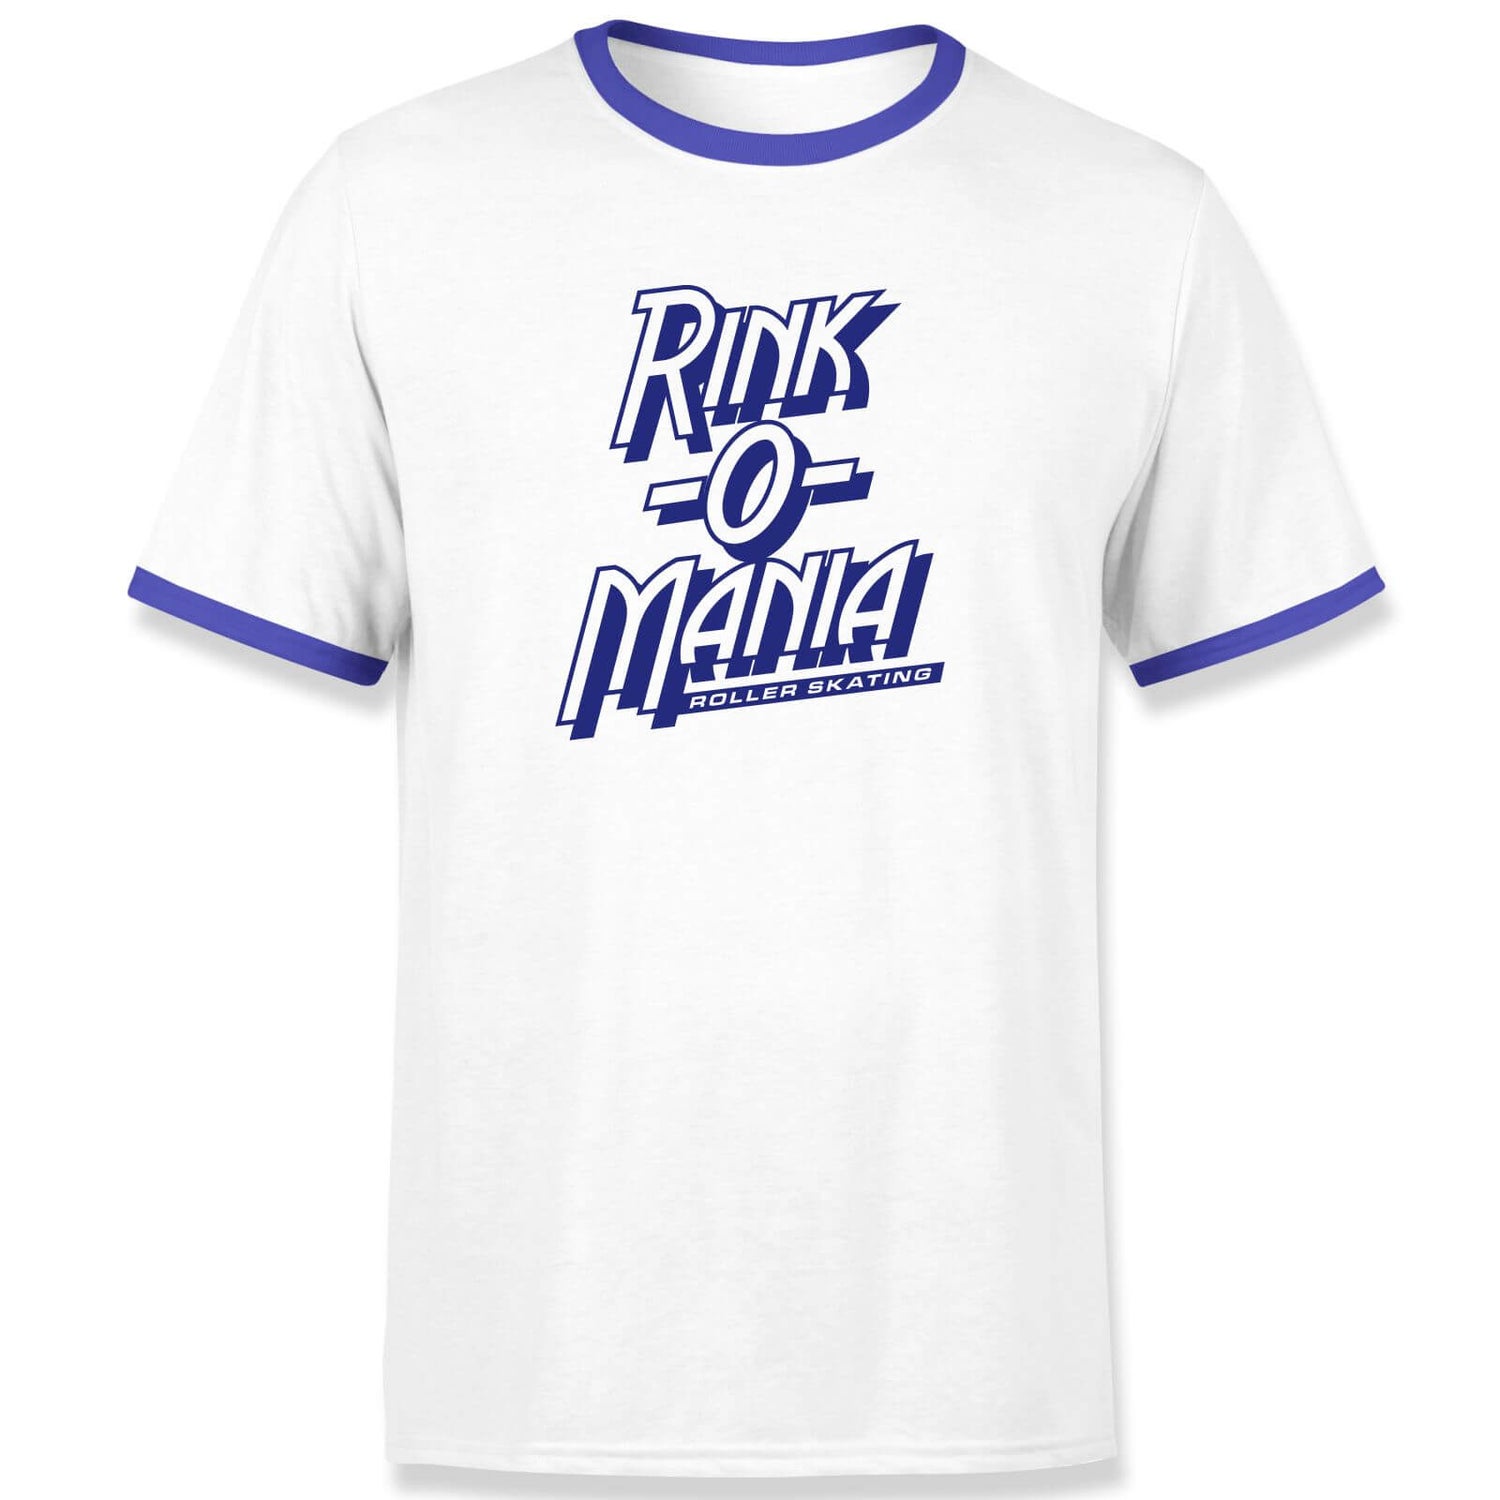 Stranger Things Rink-O-Mania Unisex Ringer T-shirt - Wit/Blauw - M - Wit